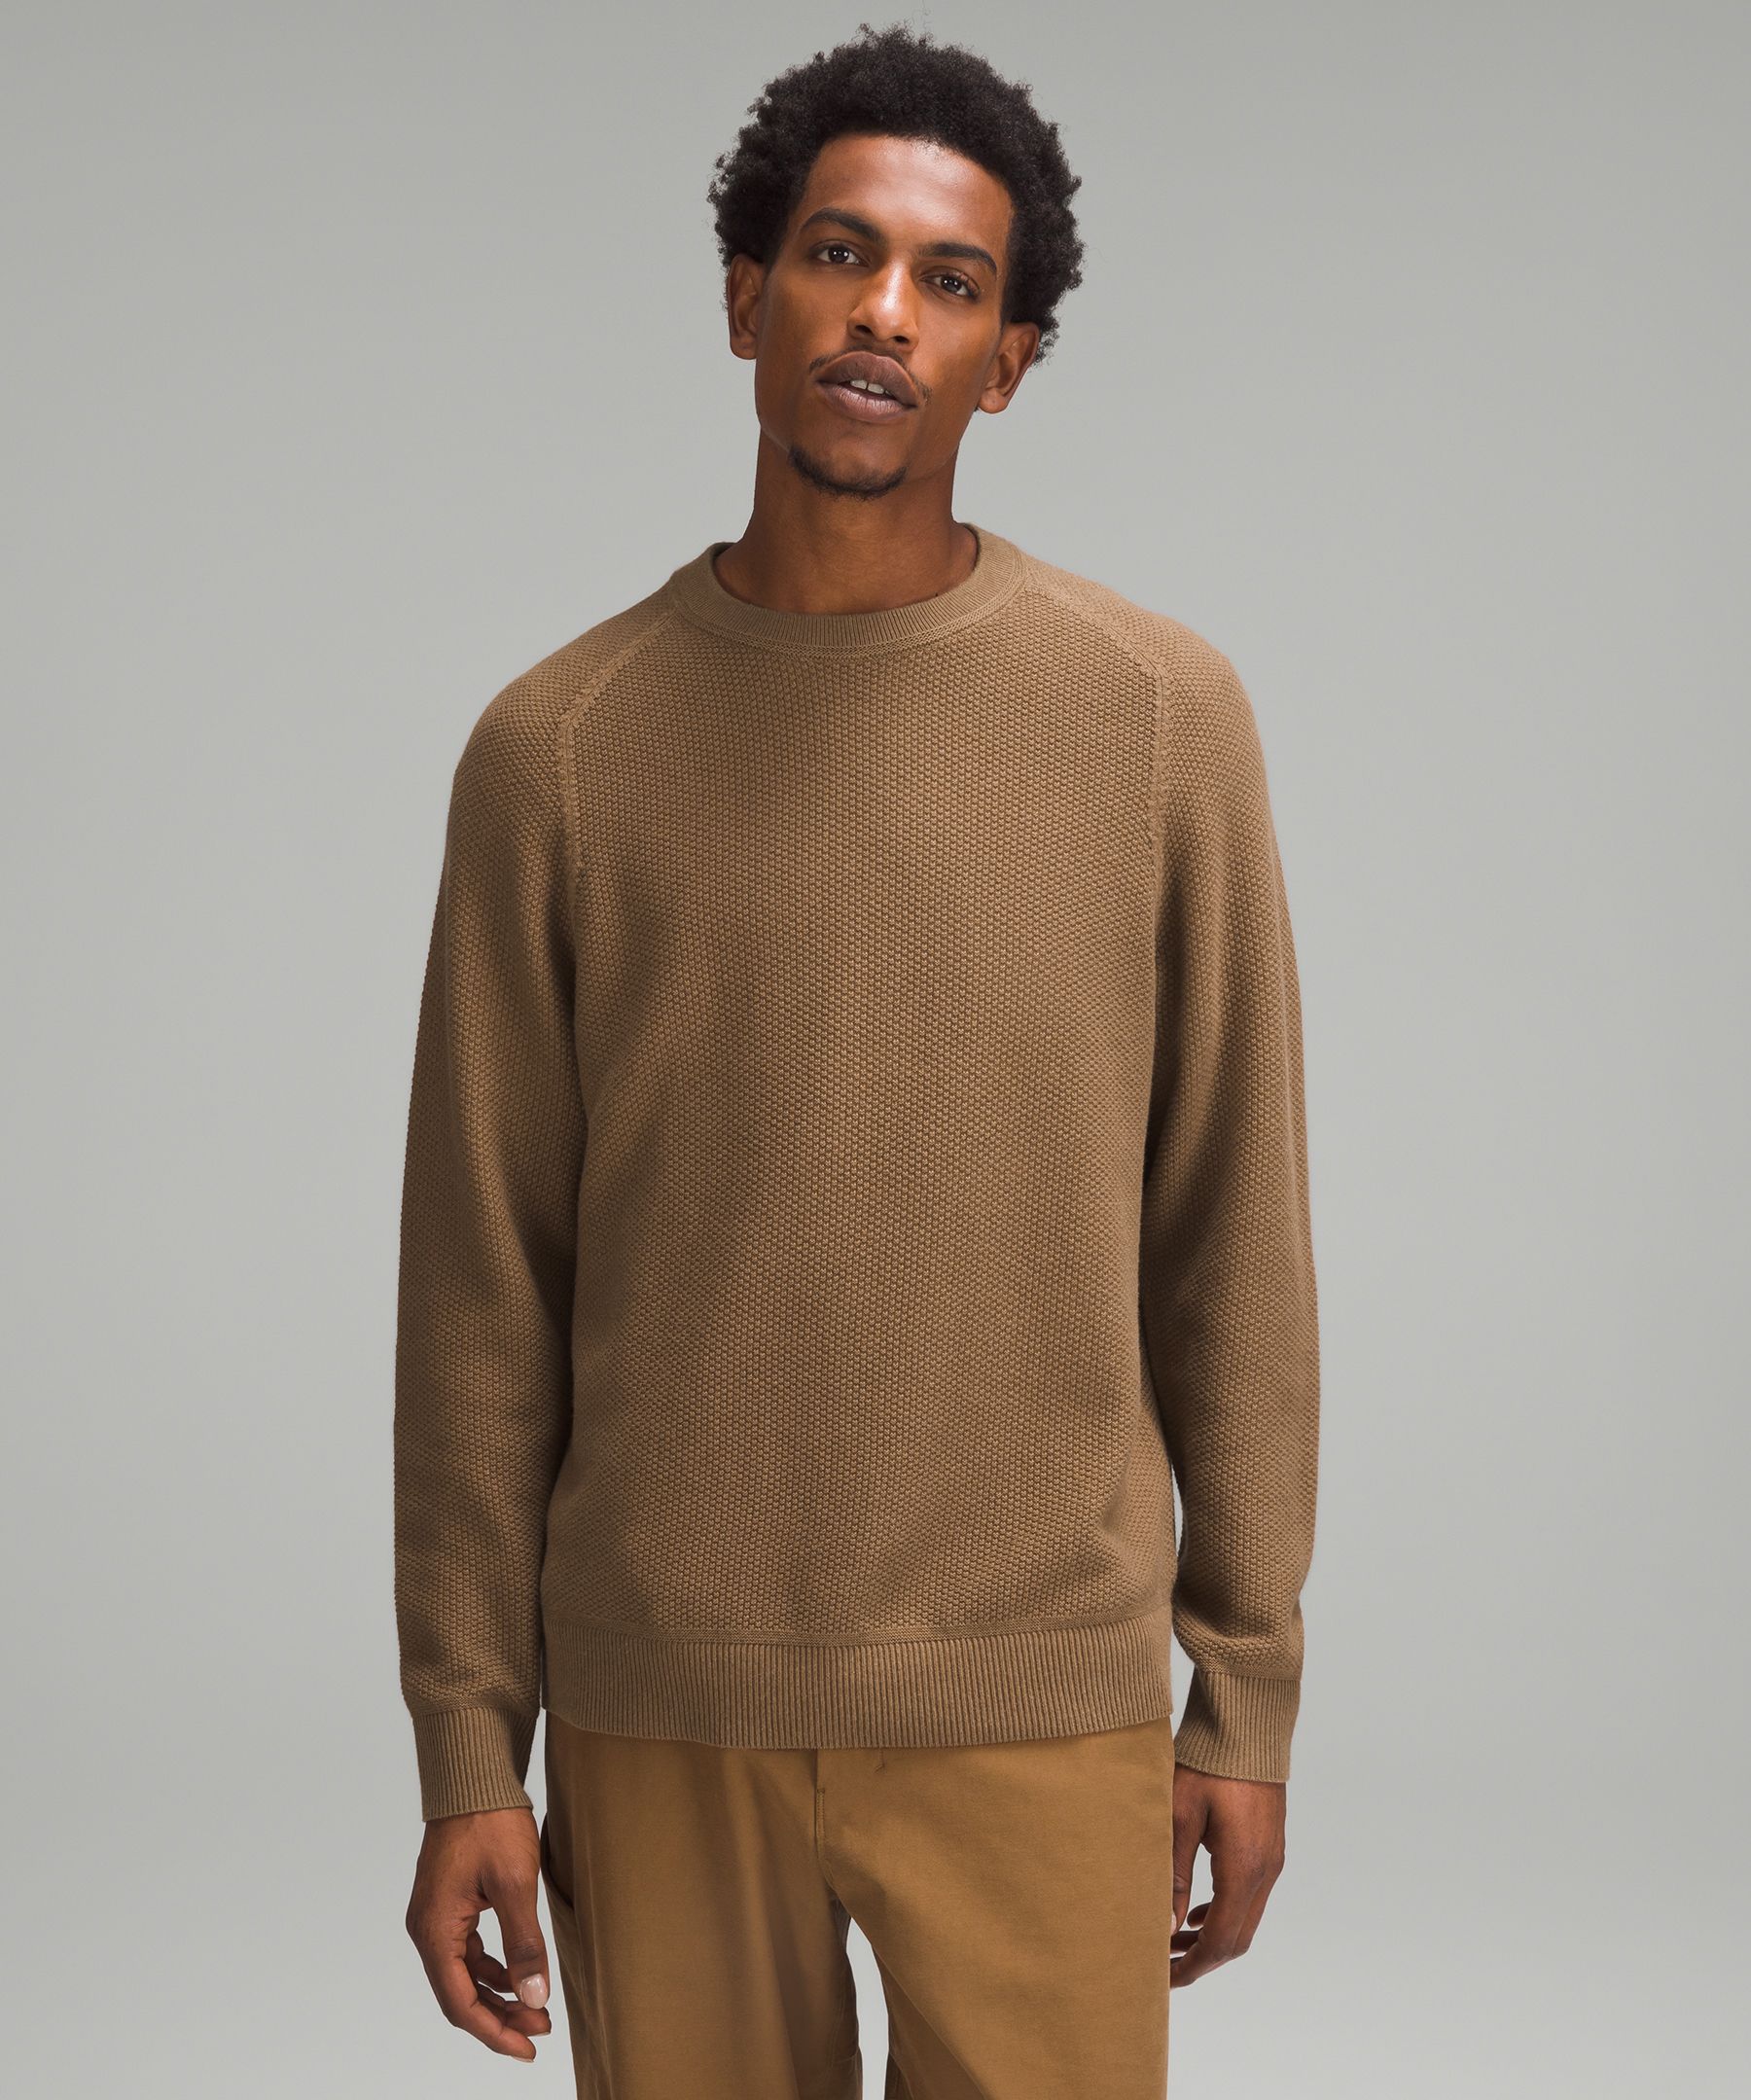 Lululemon Textured Knit Crewneck Sweater